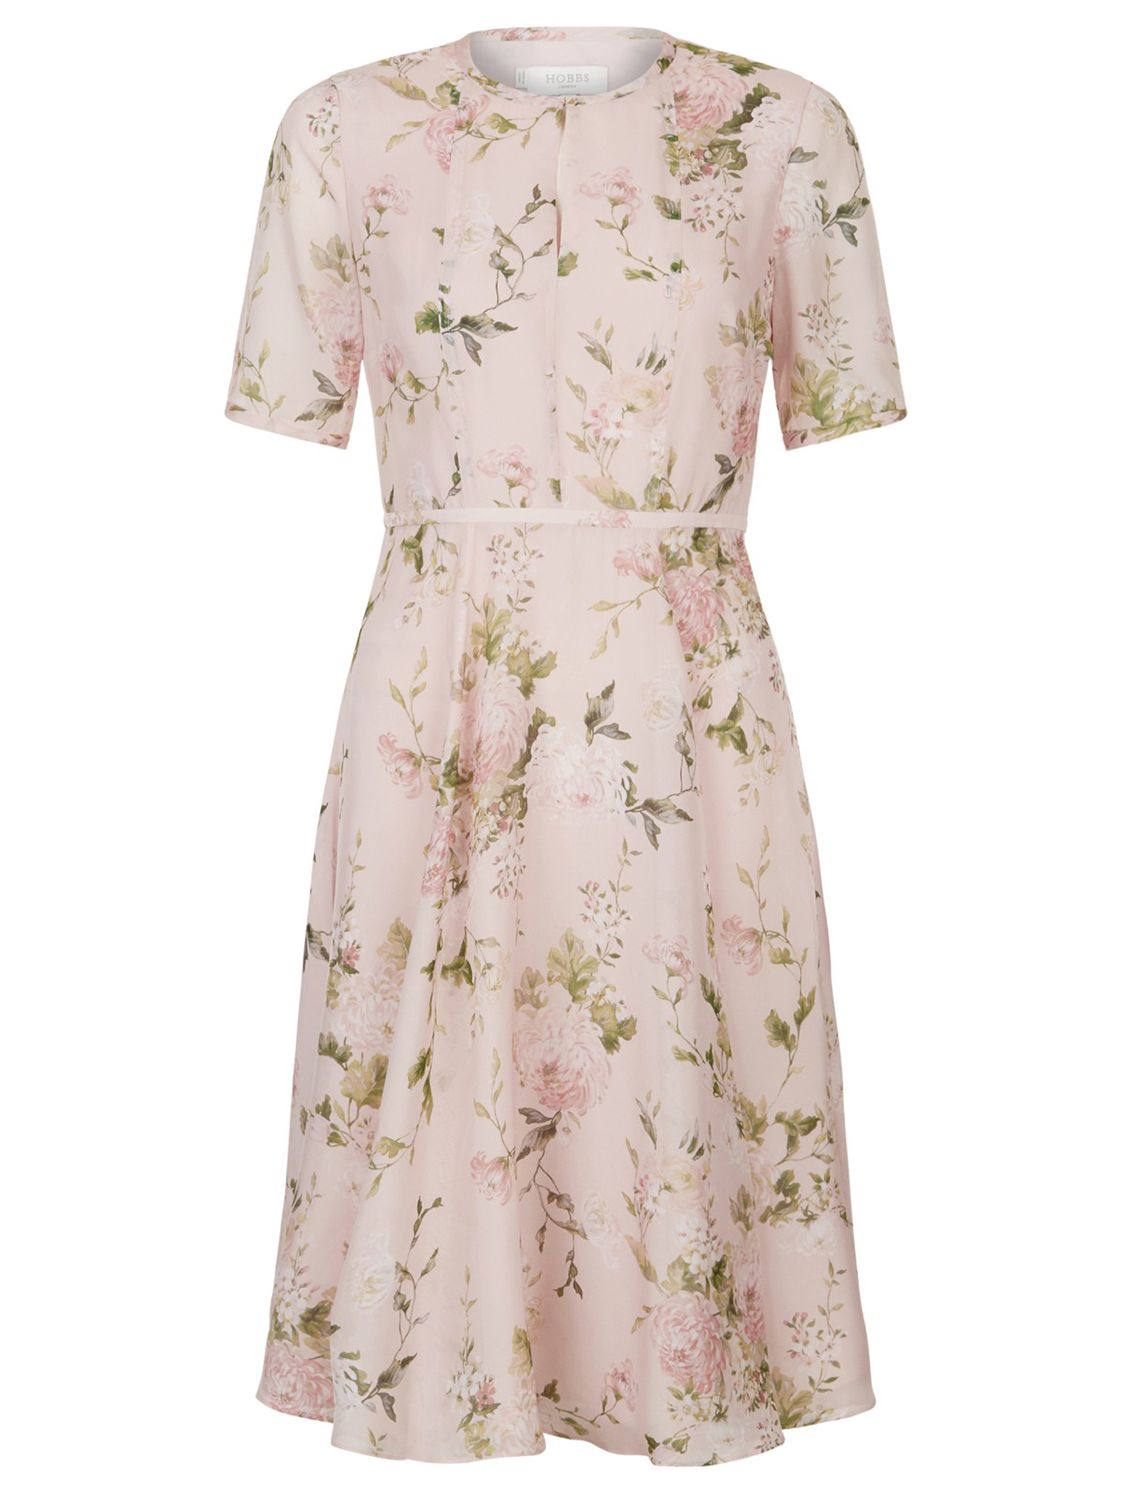 Hobbs Riley Dress, Pink/Multi at John Lewis & Partners